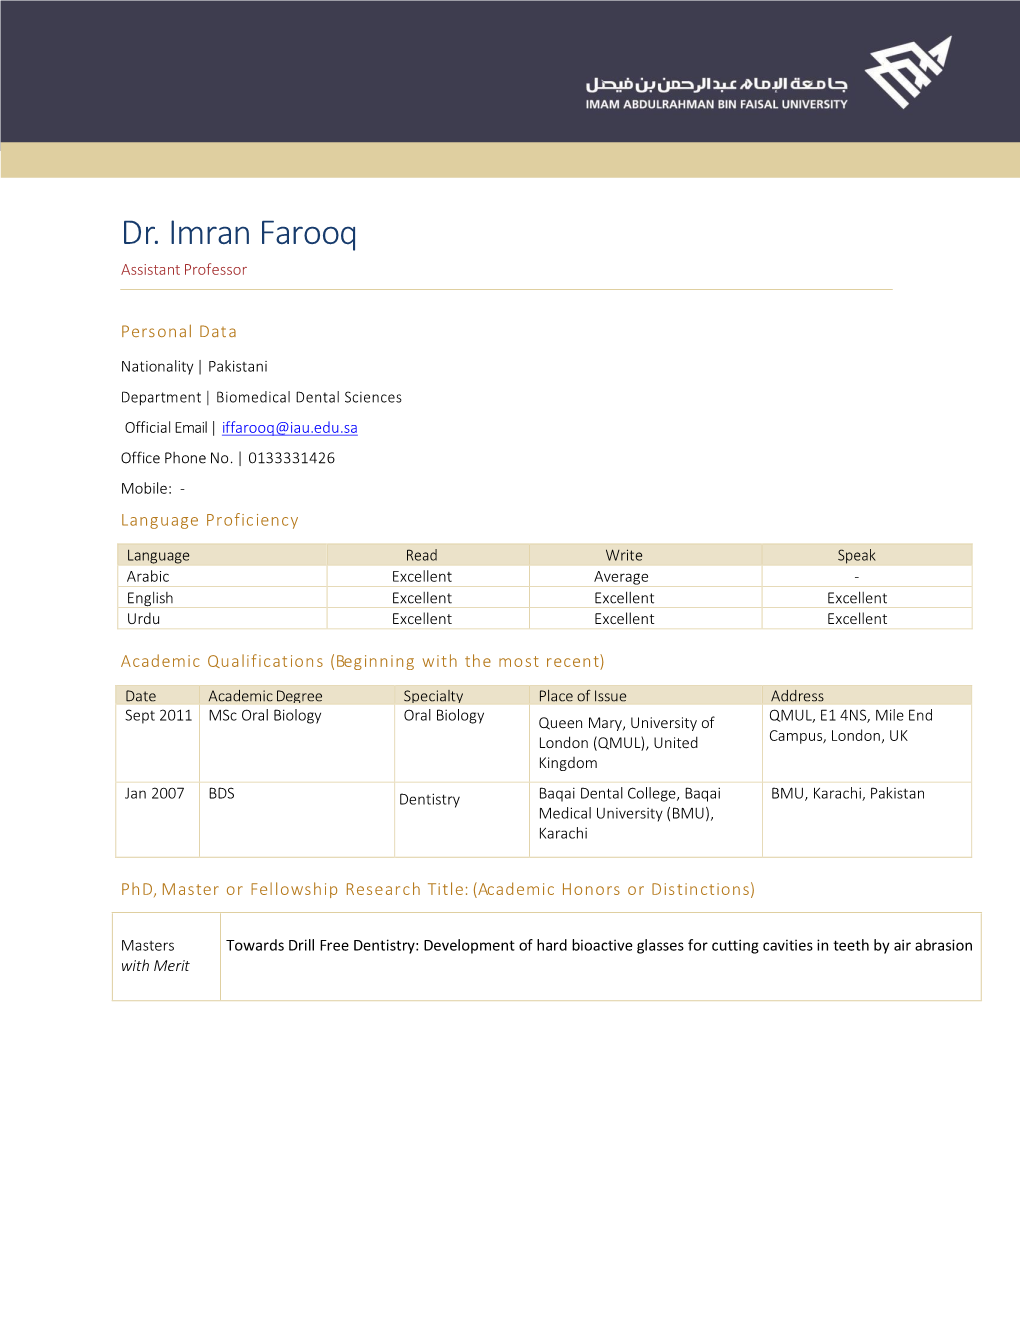 Dr. Imran Farooq's CV